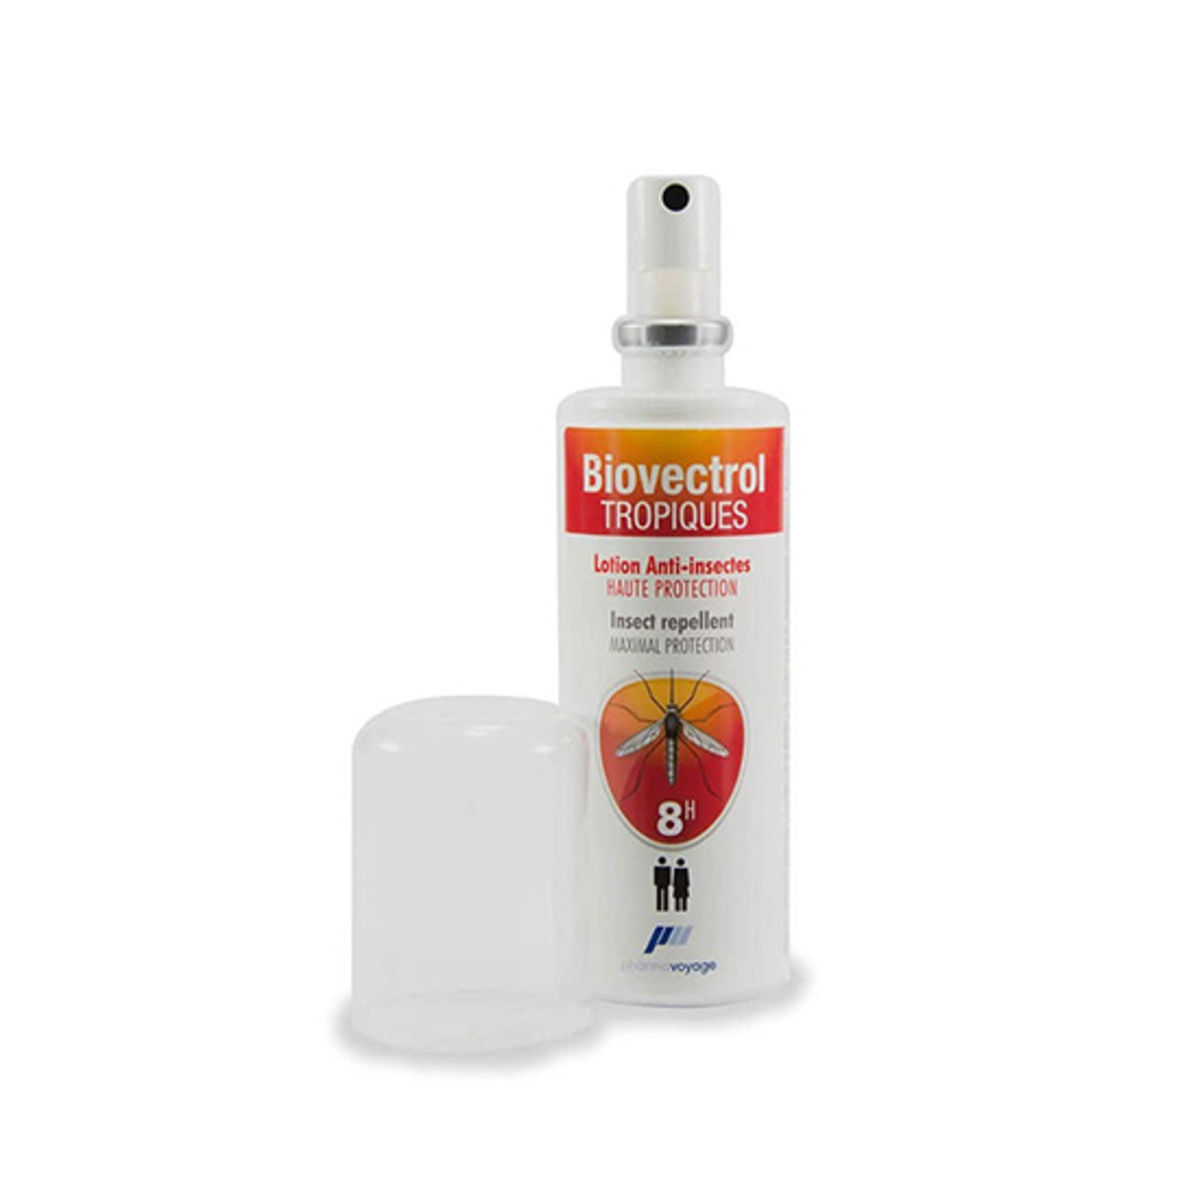 Pharmavoyage insect repellent Biovectrol Tropics